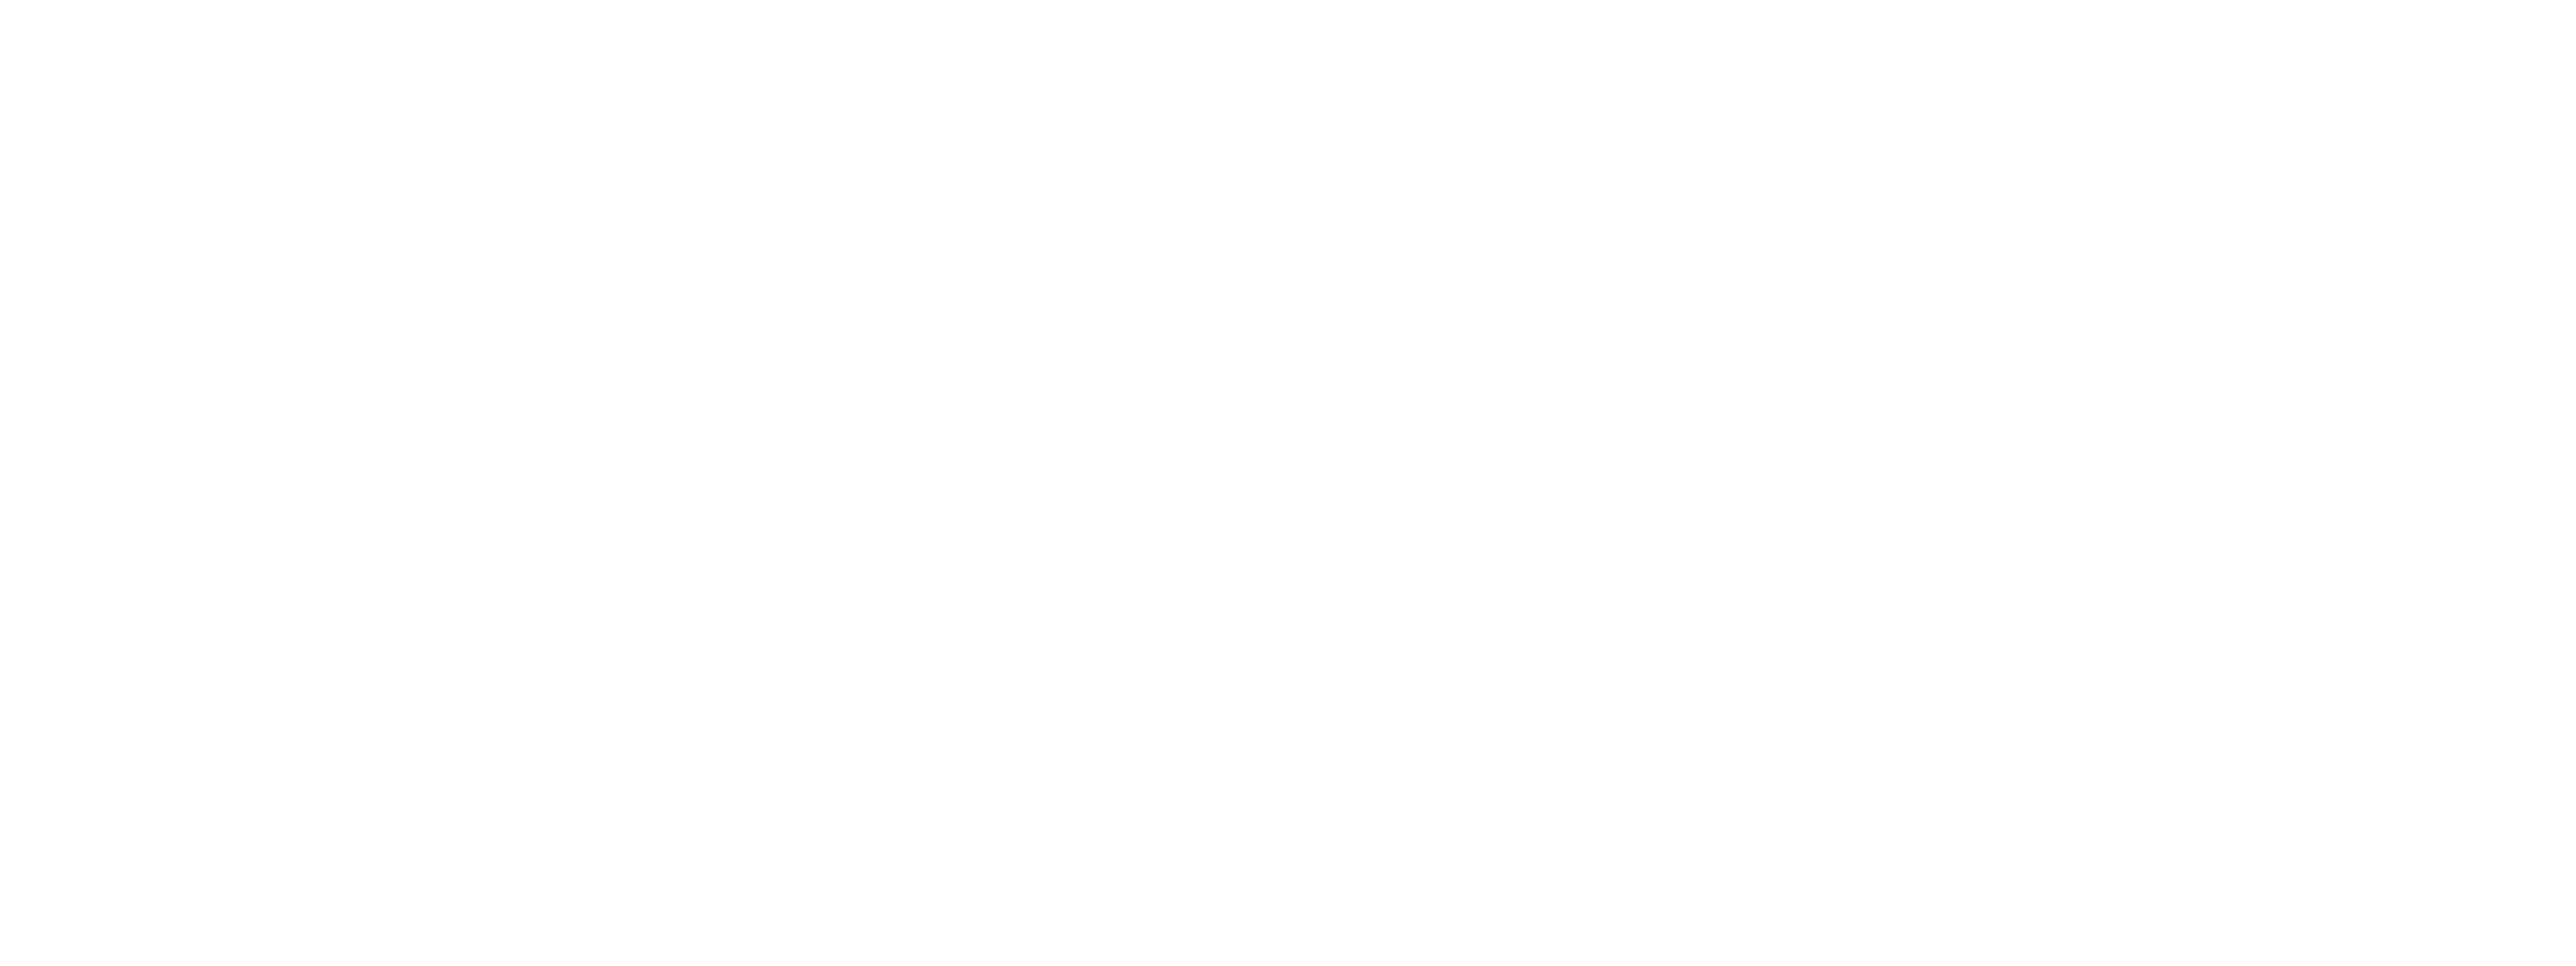 Emergent-FullLogo-White